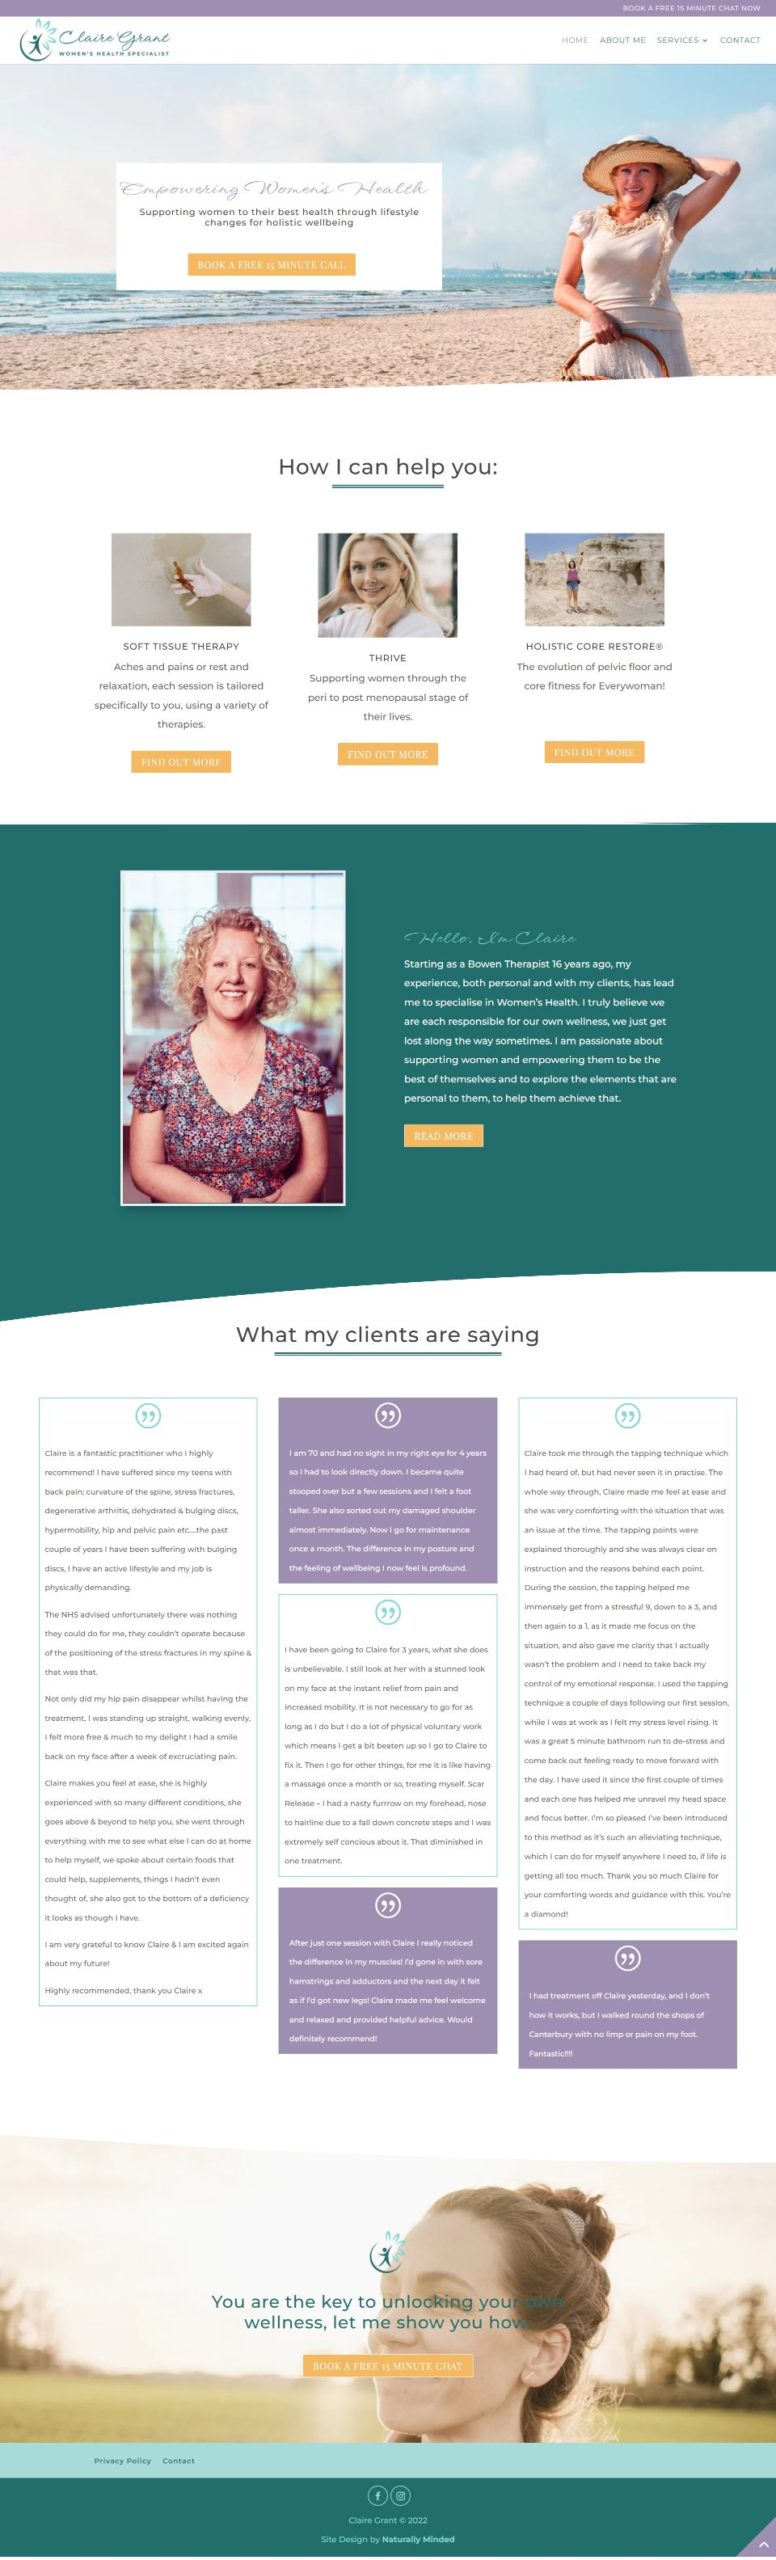 claire-grant-website-homepage-naturally-minded-illustration-sophie-taylor-website-design-wellness-business-online